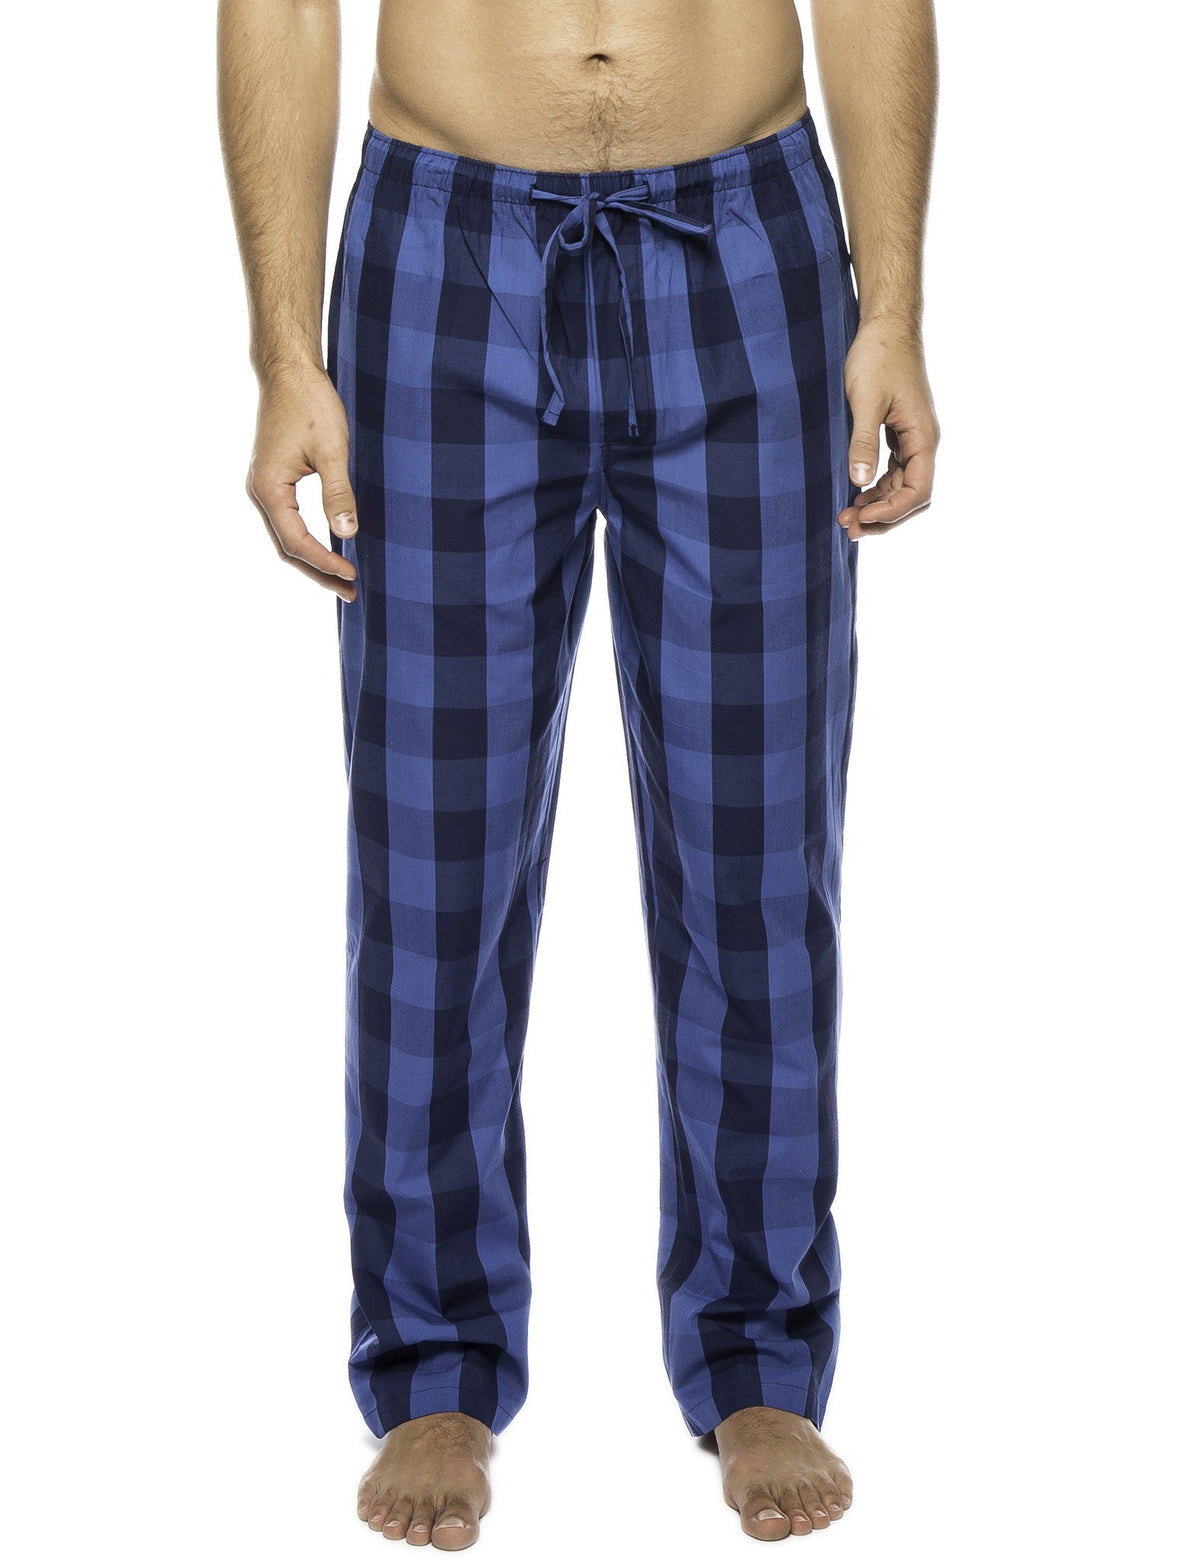 Men's 100% Woven Cotton Lounge Pants - Gingham Navy/Blue